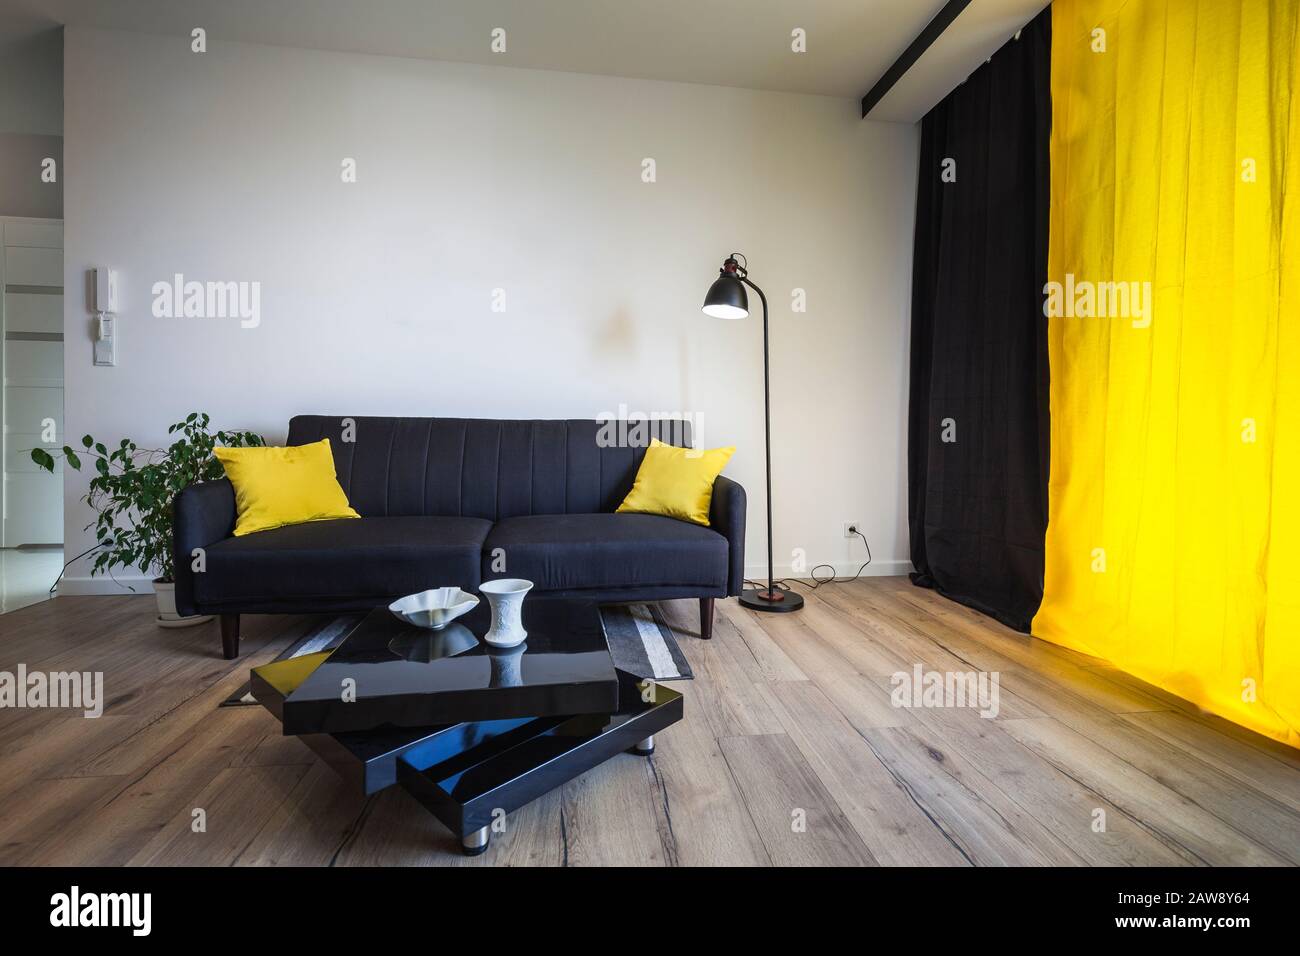 Special livingroom of your dreams. Real livingrooom Stock Photo